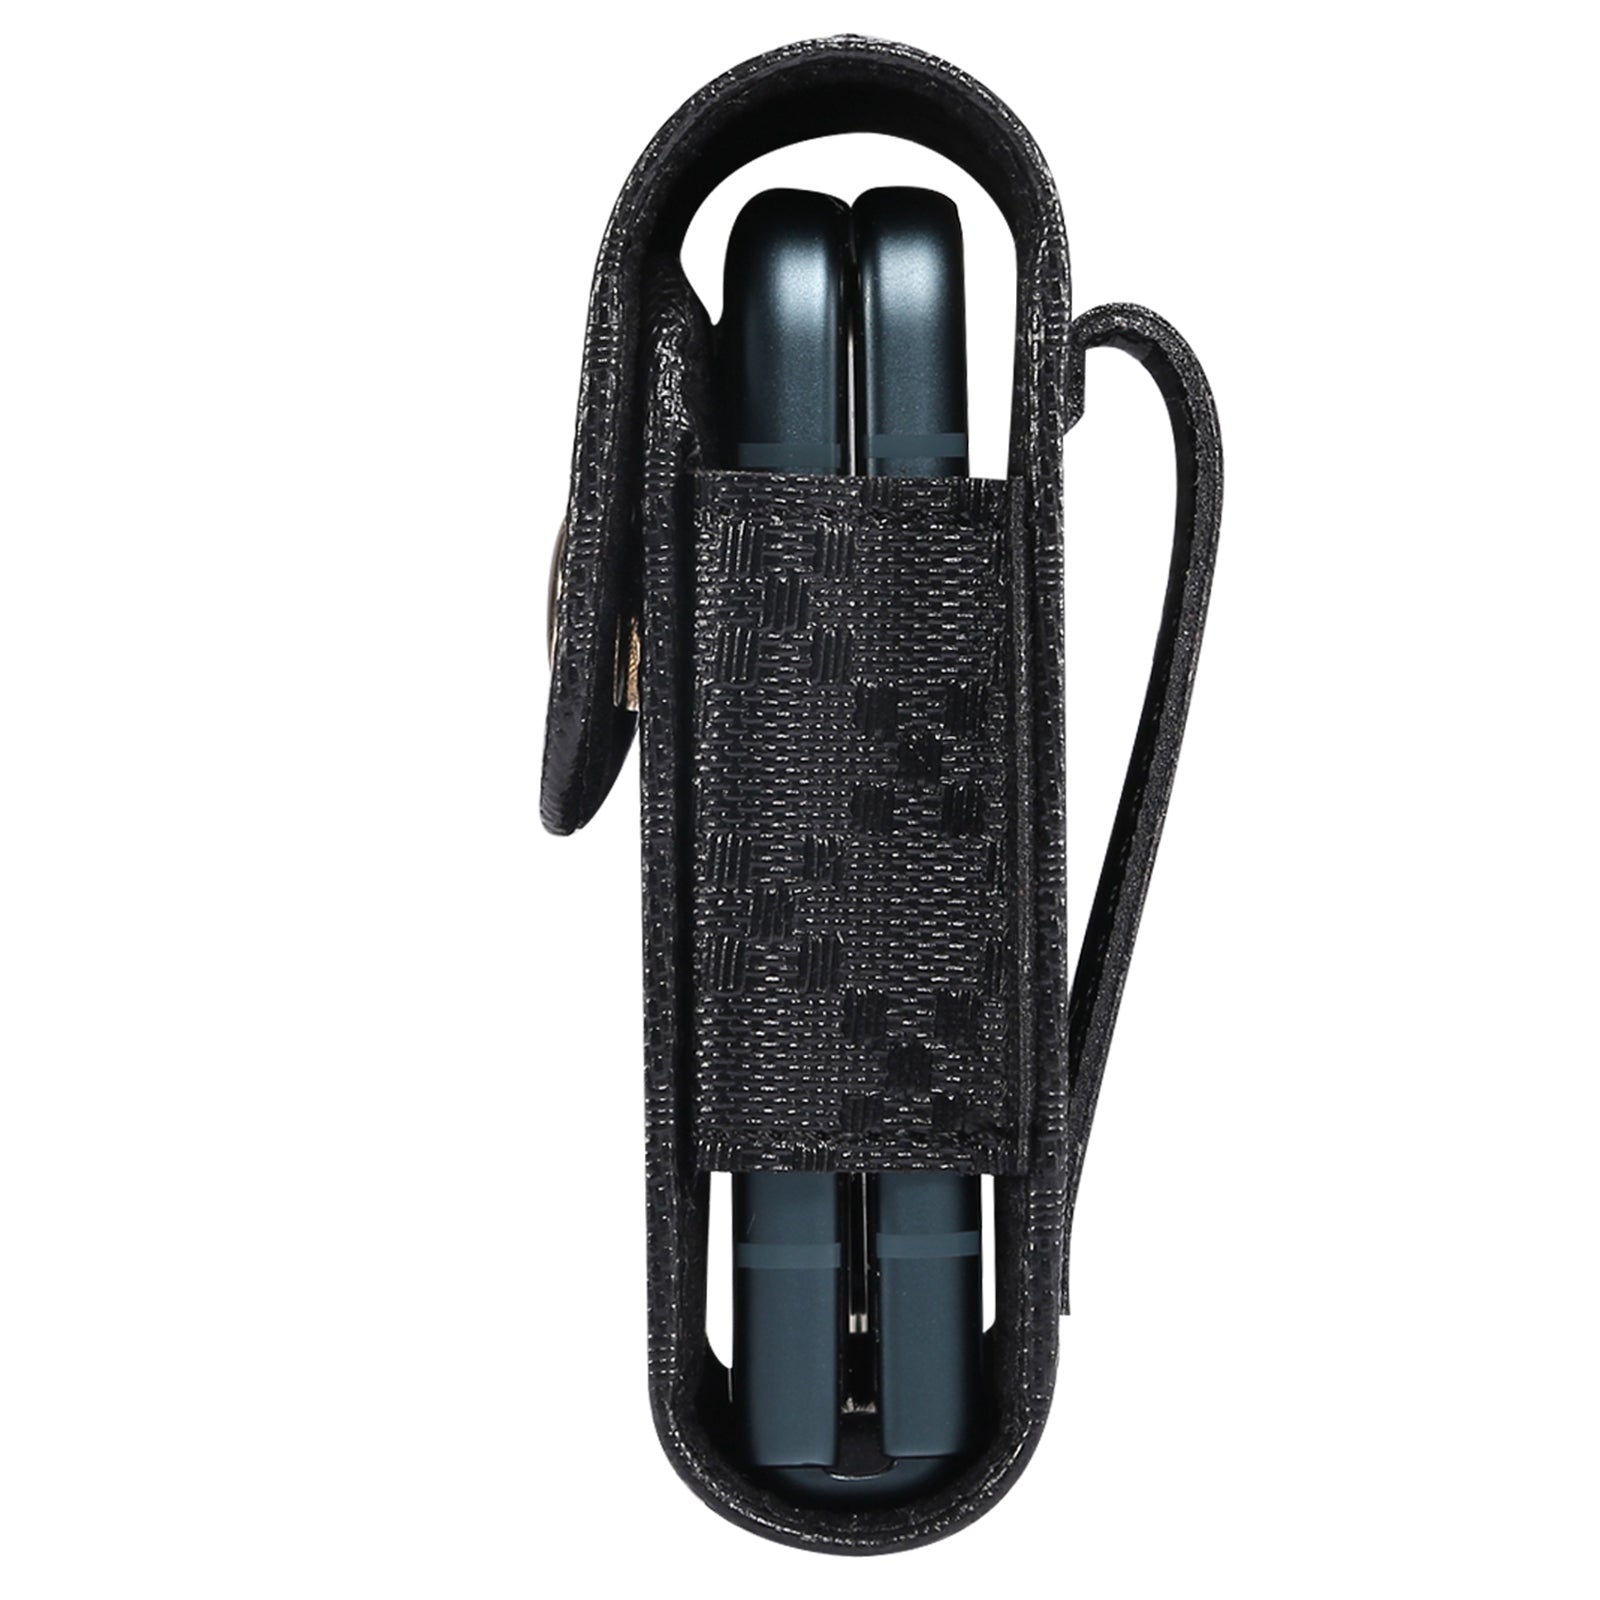 Grid Pattern Microfiber Leather Vertical Flip Cellphone Belt Loop Holster Case Belt Waist Bag for Samsung Galaxy Z Flip / Galaxy Z Flip3 5G / Motorola Razr 5G